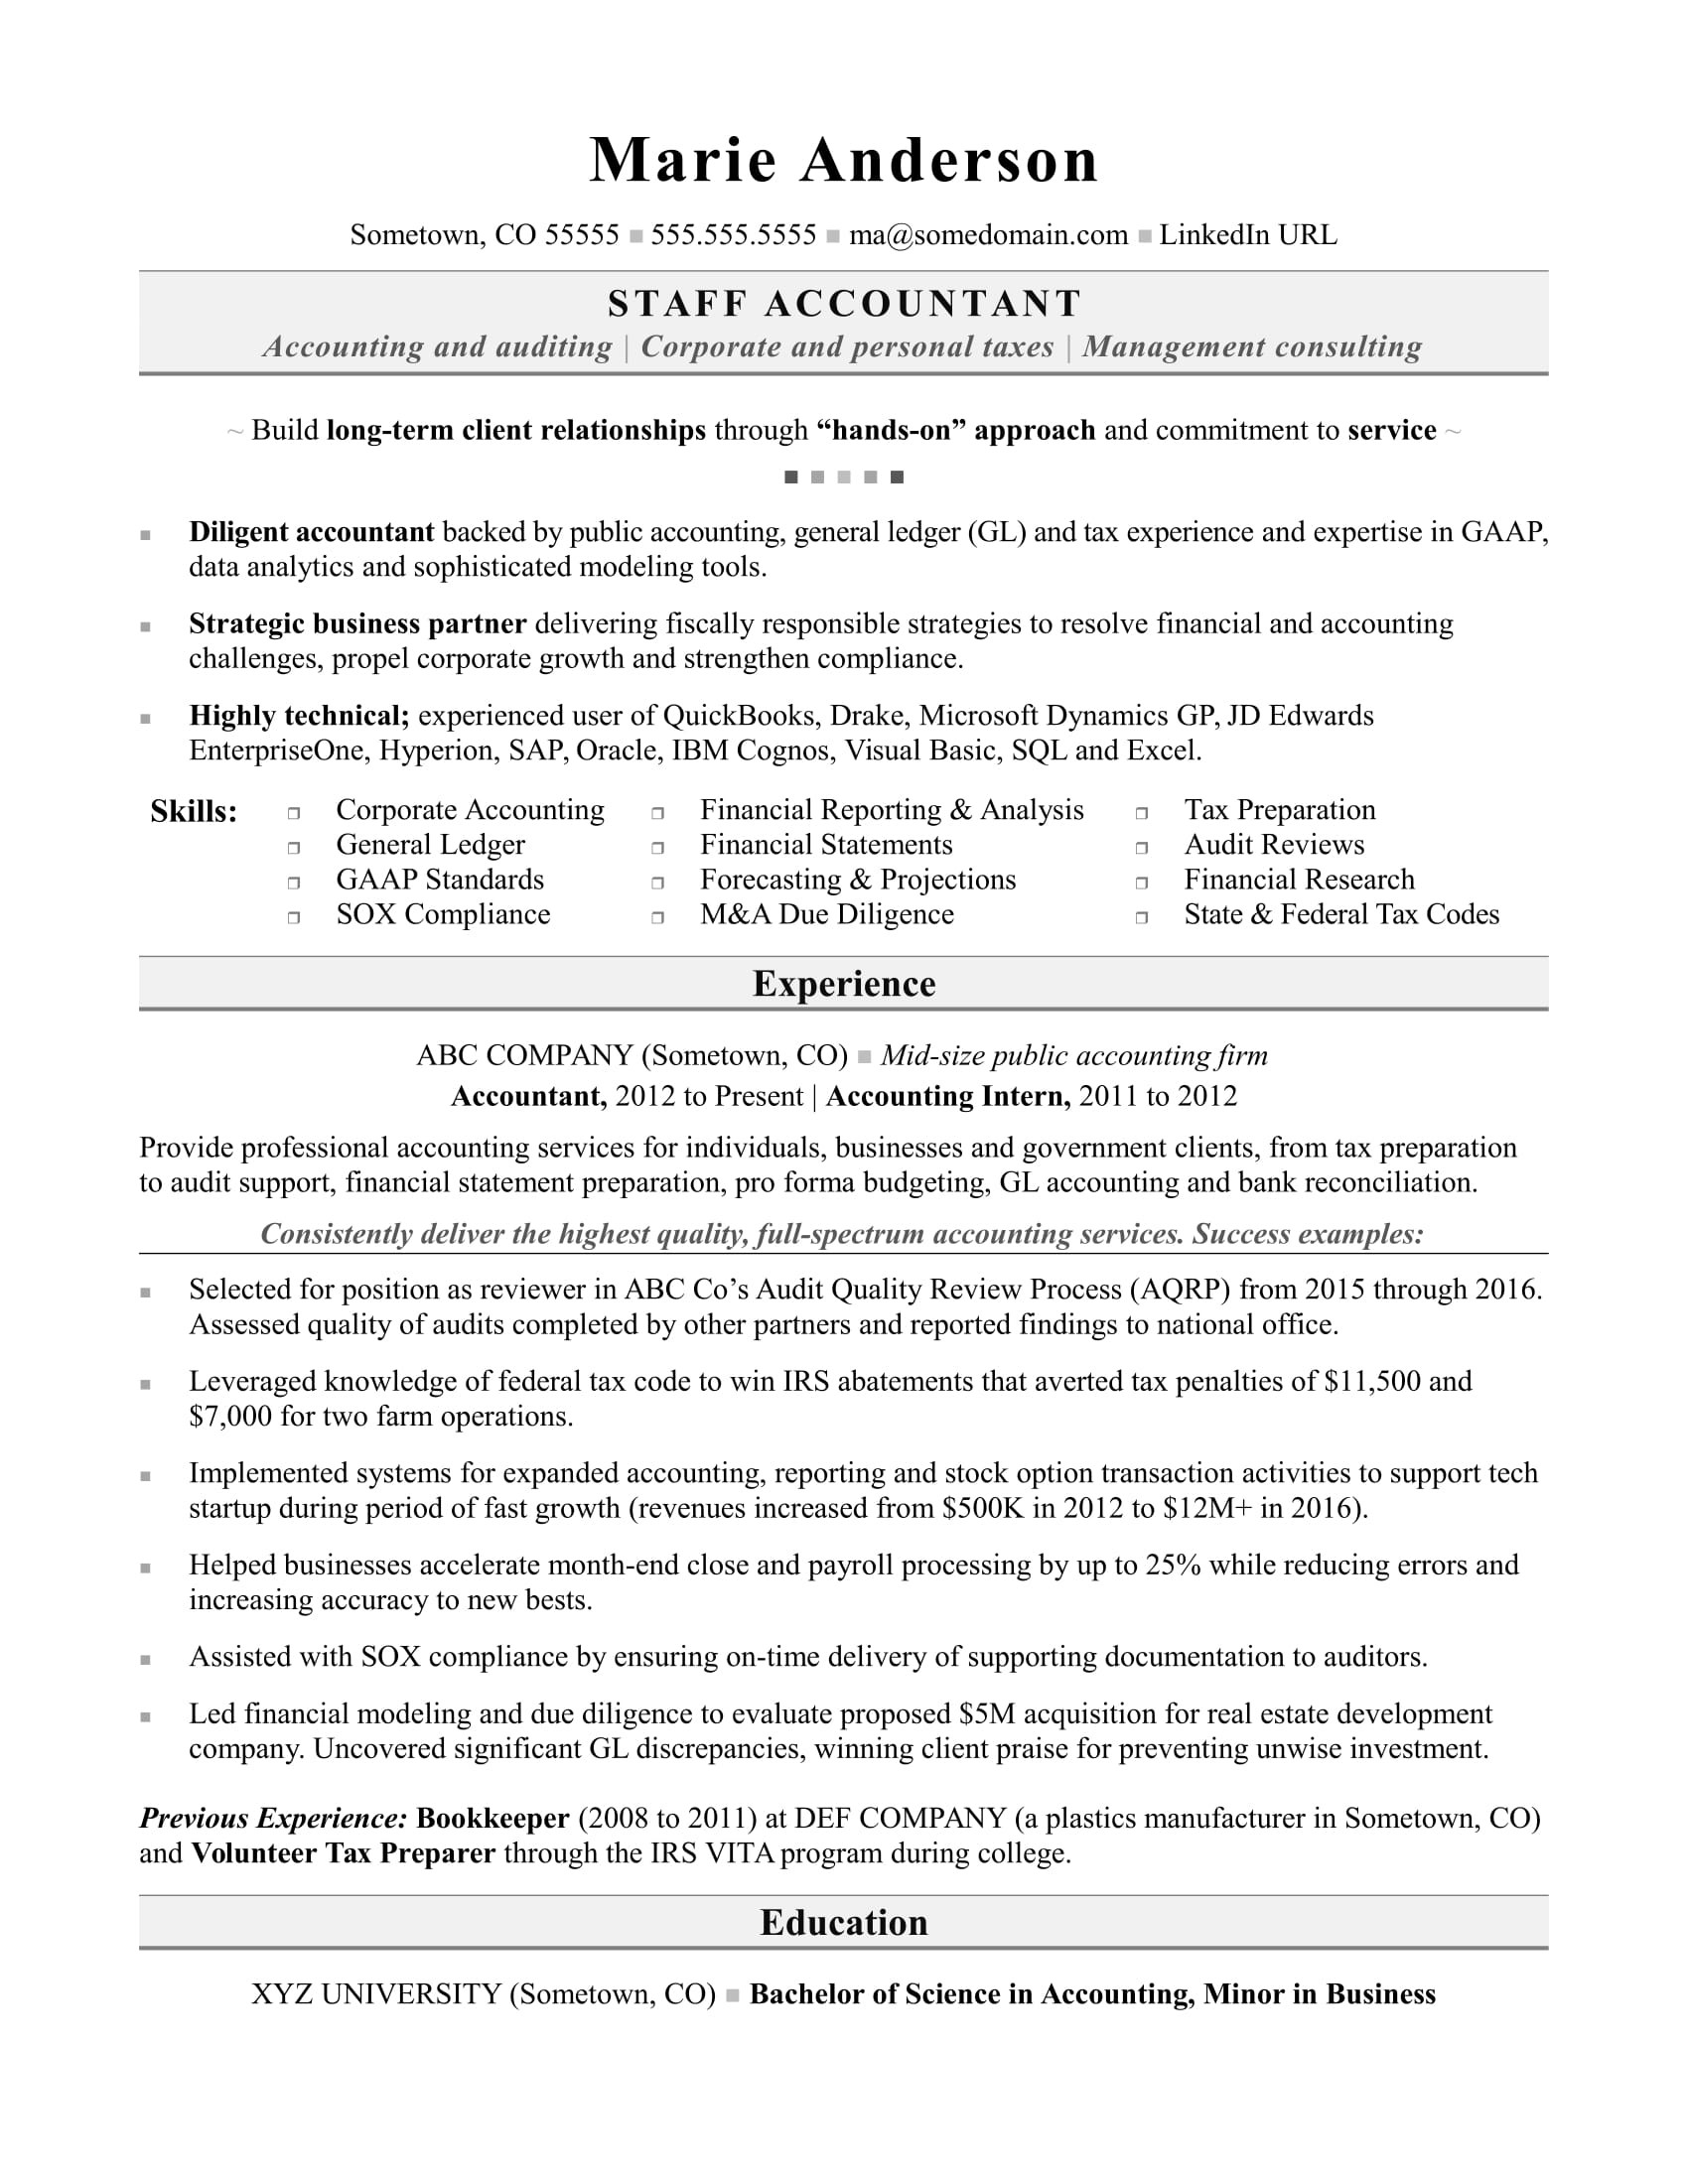 Senior Audit Readiness Consultant Resume Sample Accountant Resume Monster.com